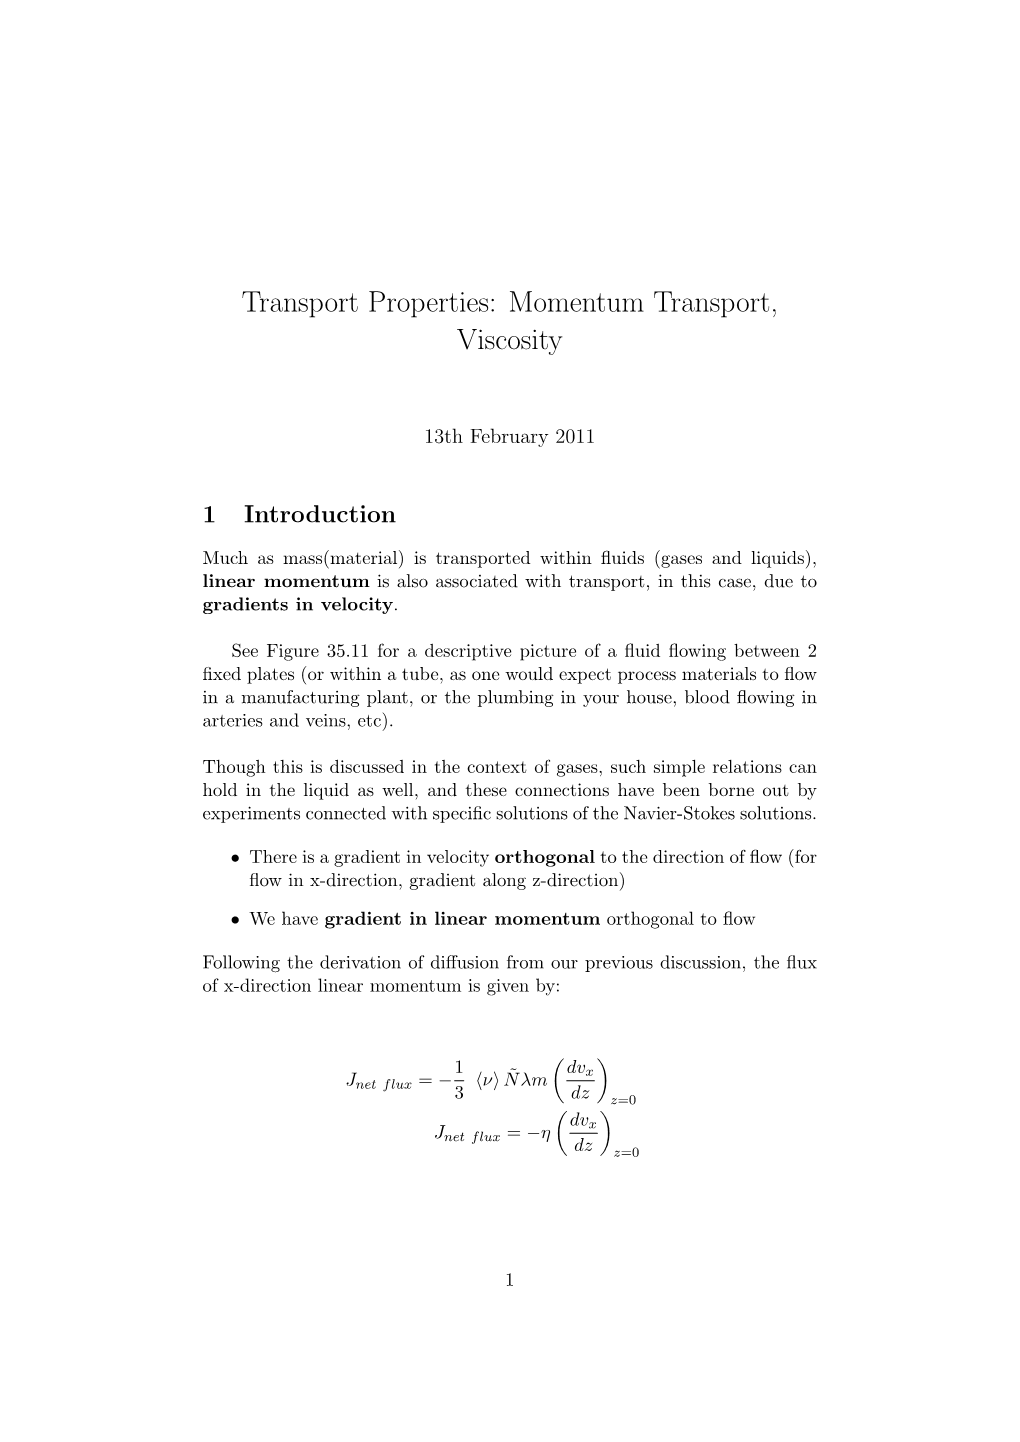 Transport Properties: Momentum Transport, Viscosity